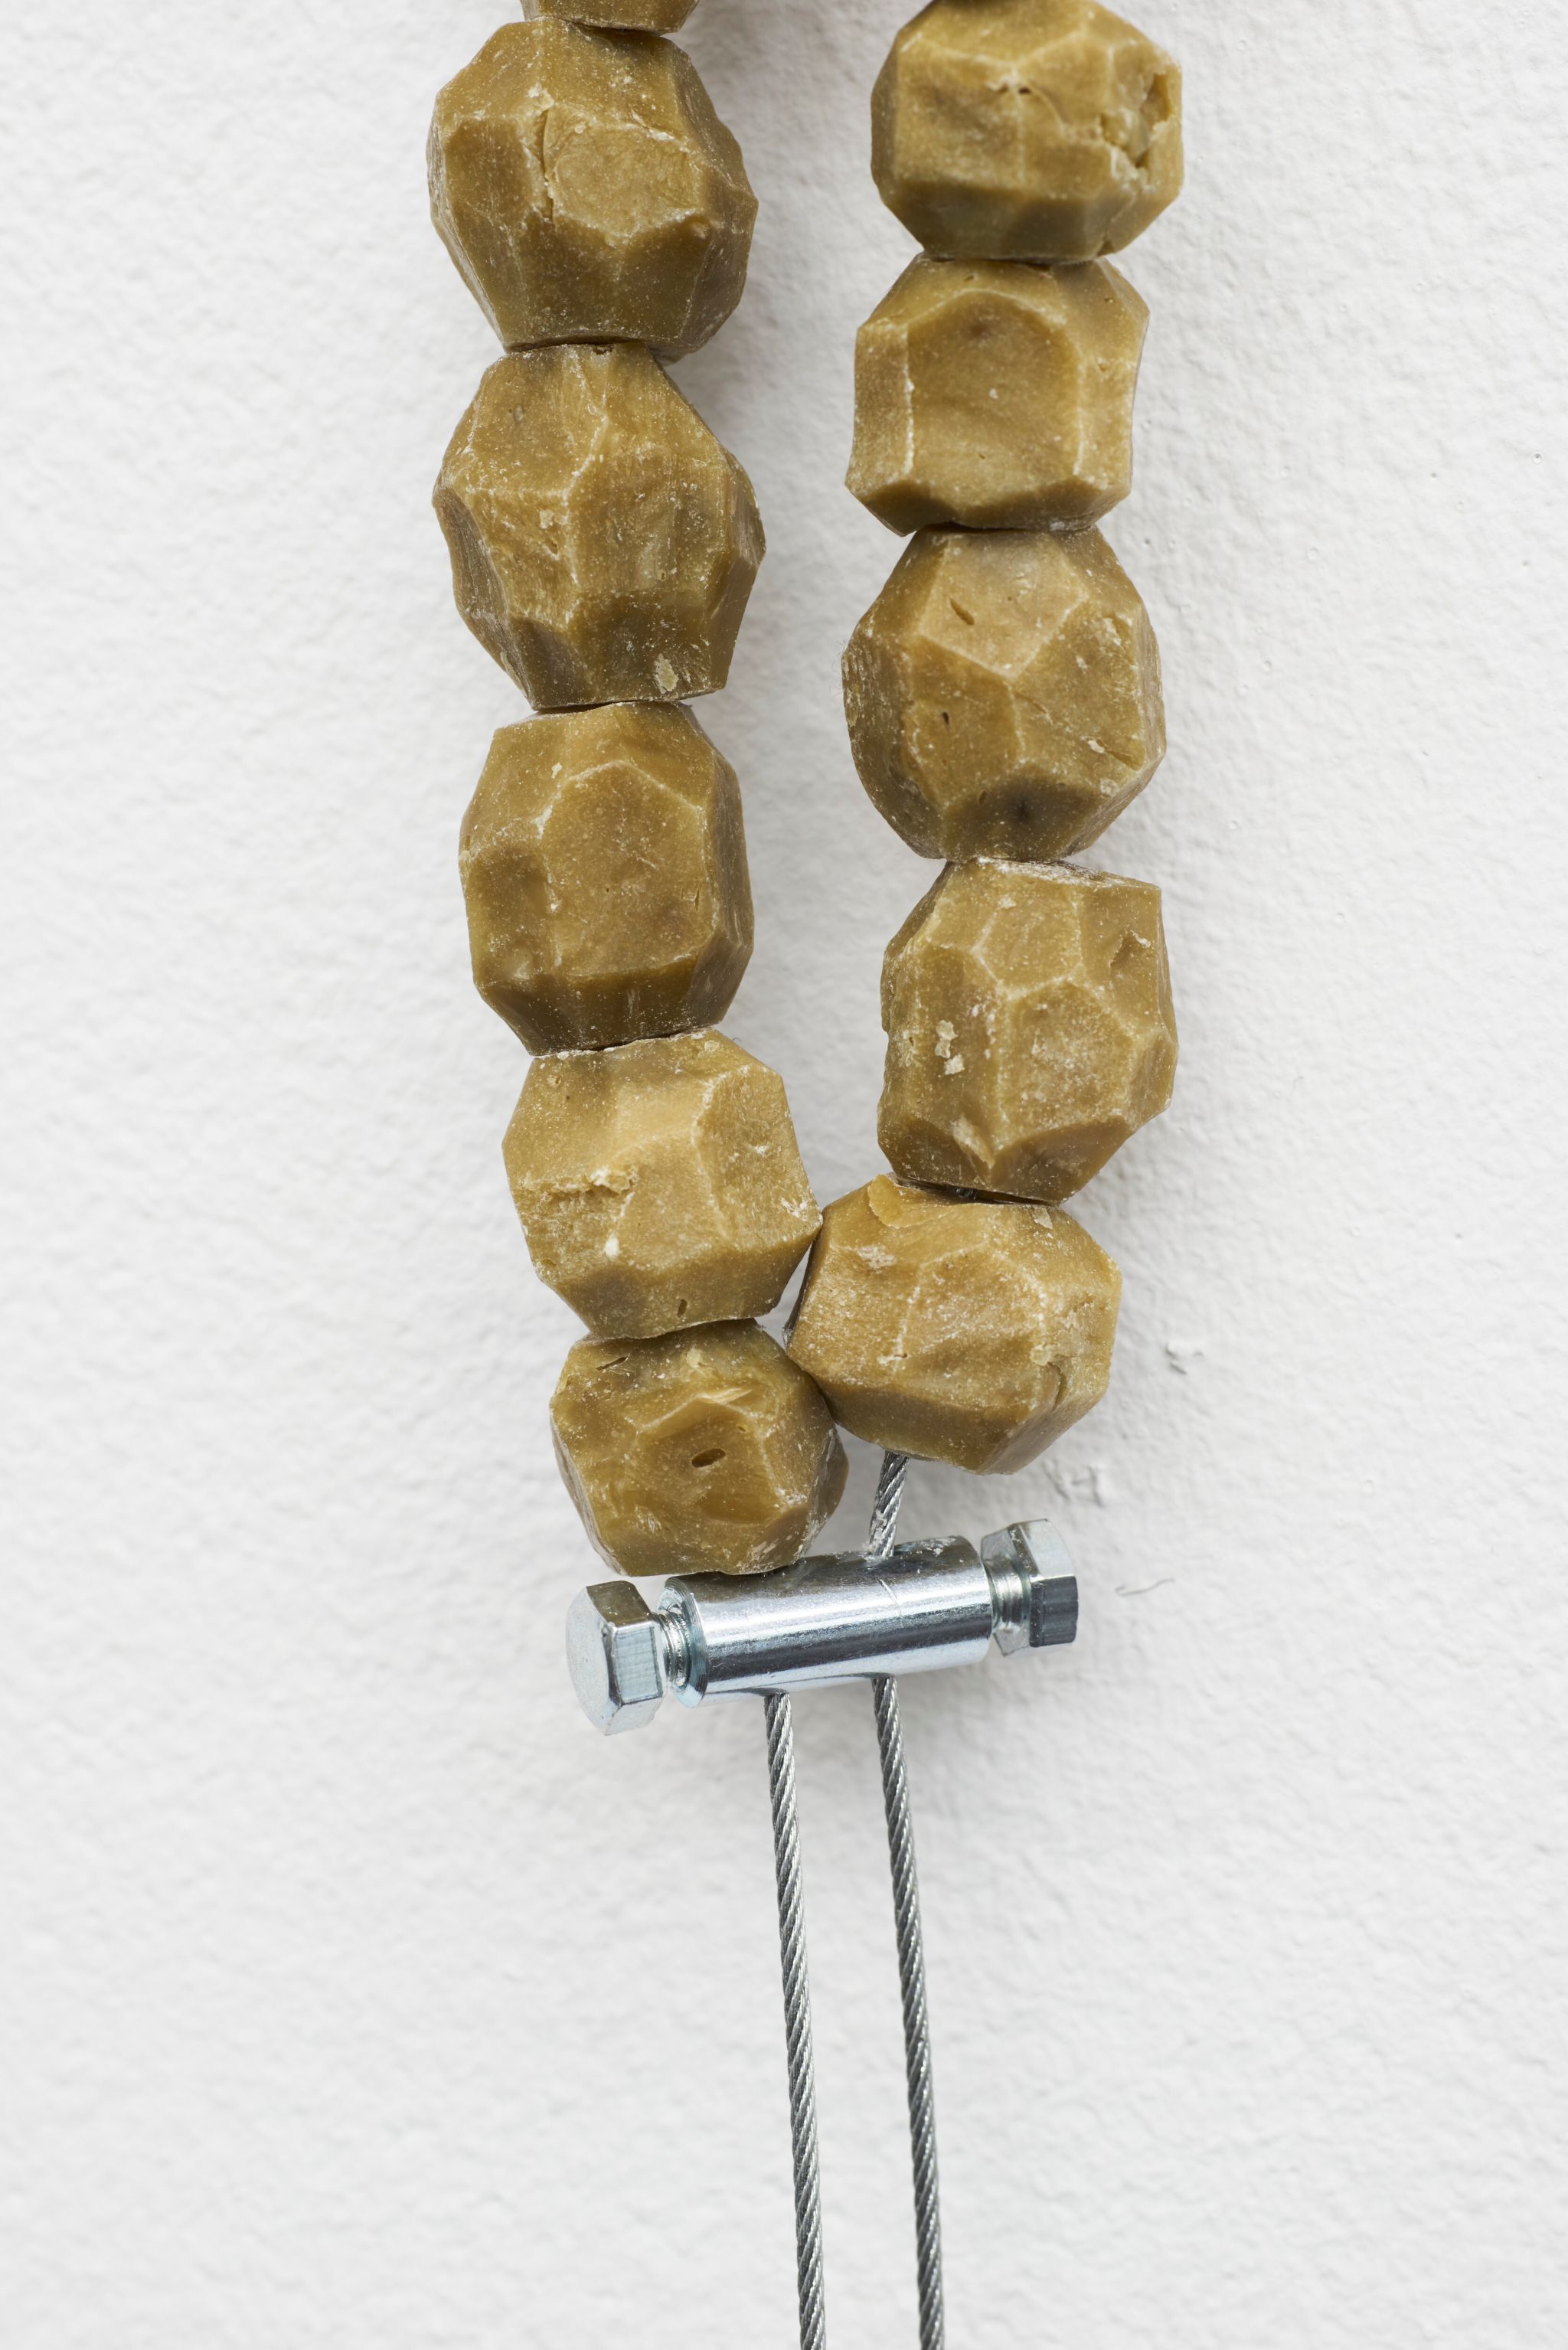 Davide Stucchi, Necklace (Koboloi) I (detail), 2017, Soap beads, iron wire, 161 ⁠× ⁠7 ⁠× ⁠4 ⁠⁠cm